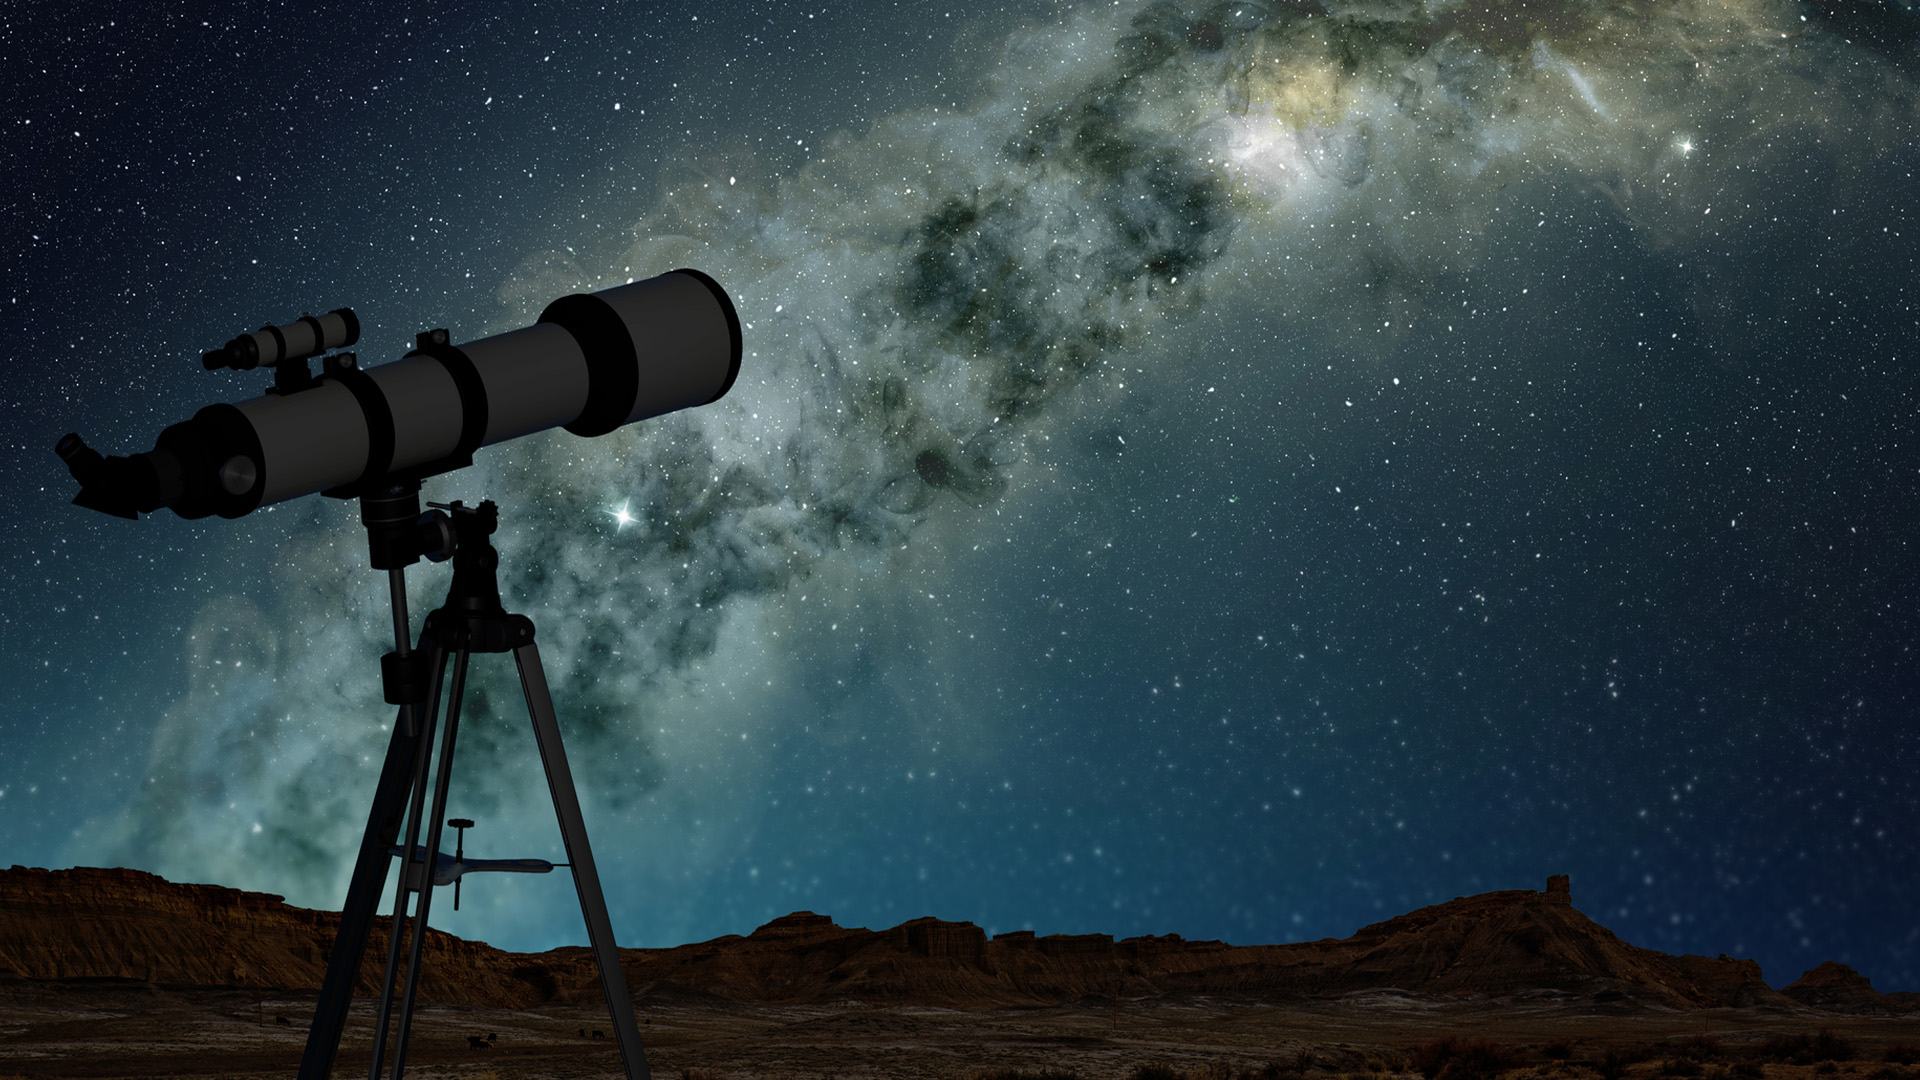 Employment-labor-telescope-sky-milkyway-stars-meteor-astrology